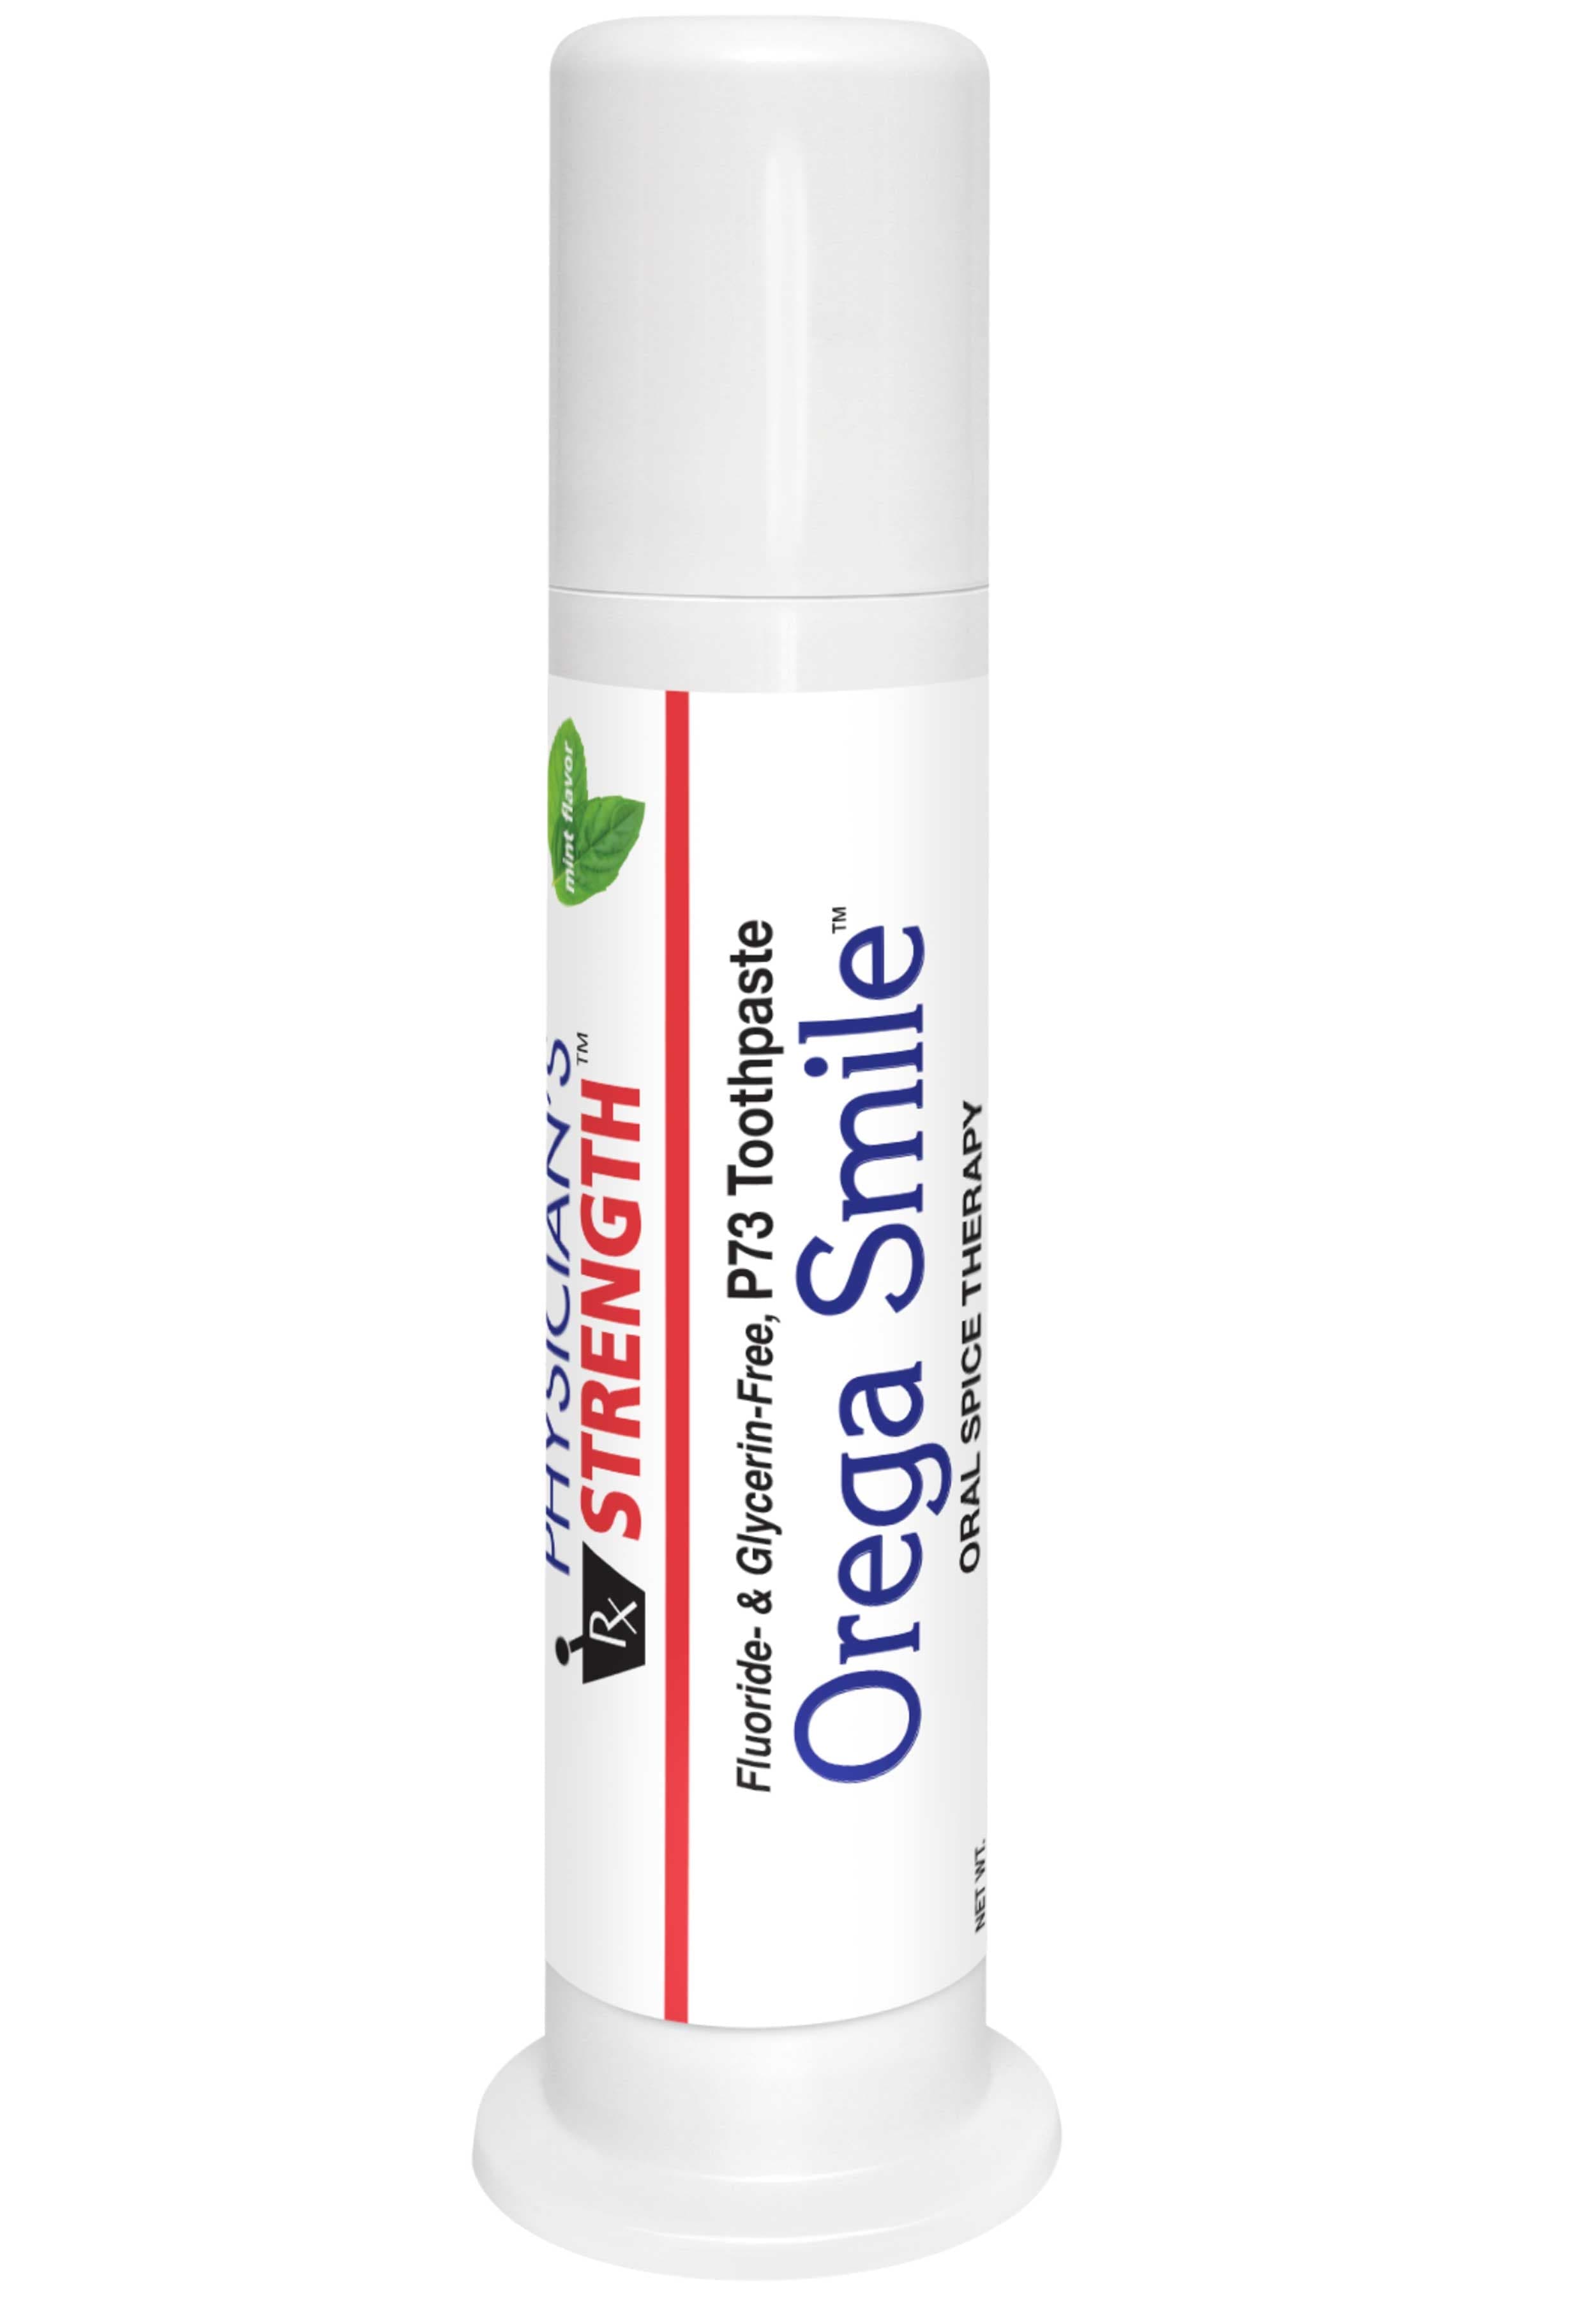 Physician's Strength OregaSmile Toothpaste